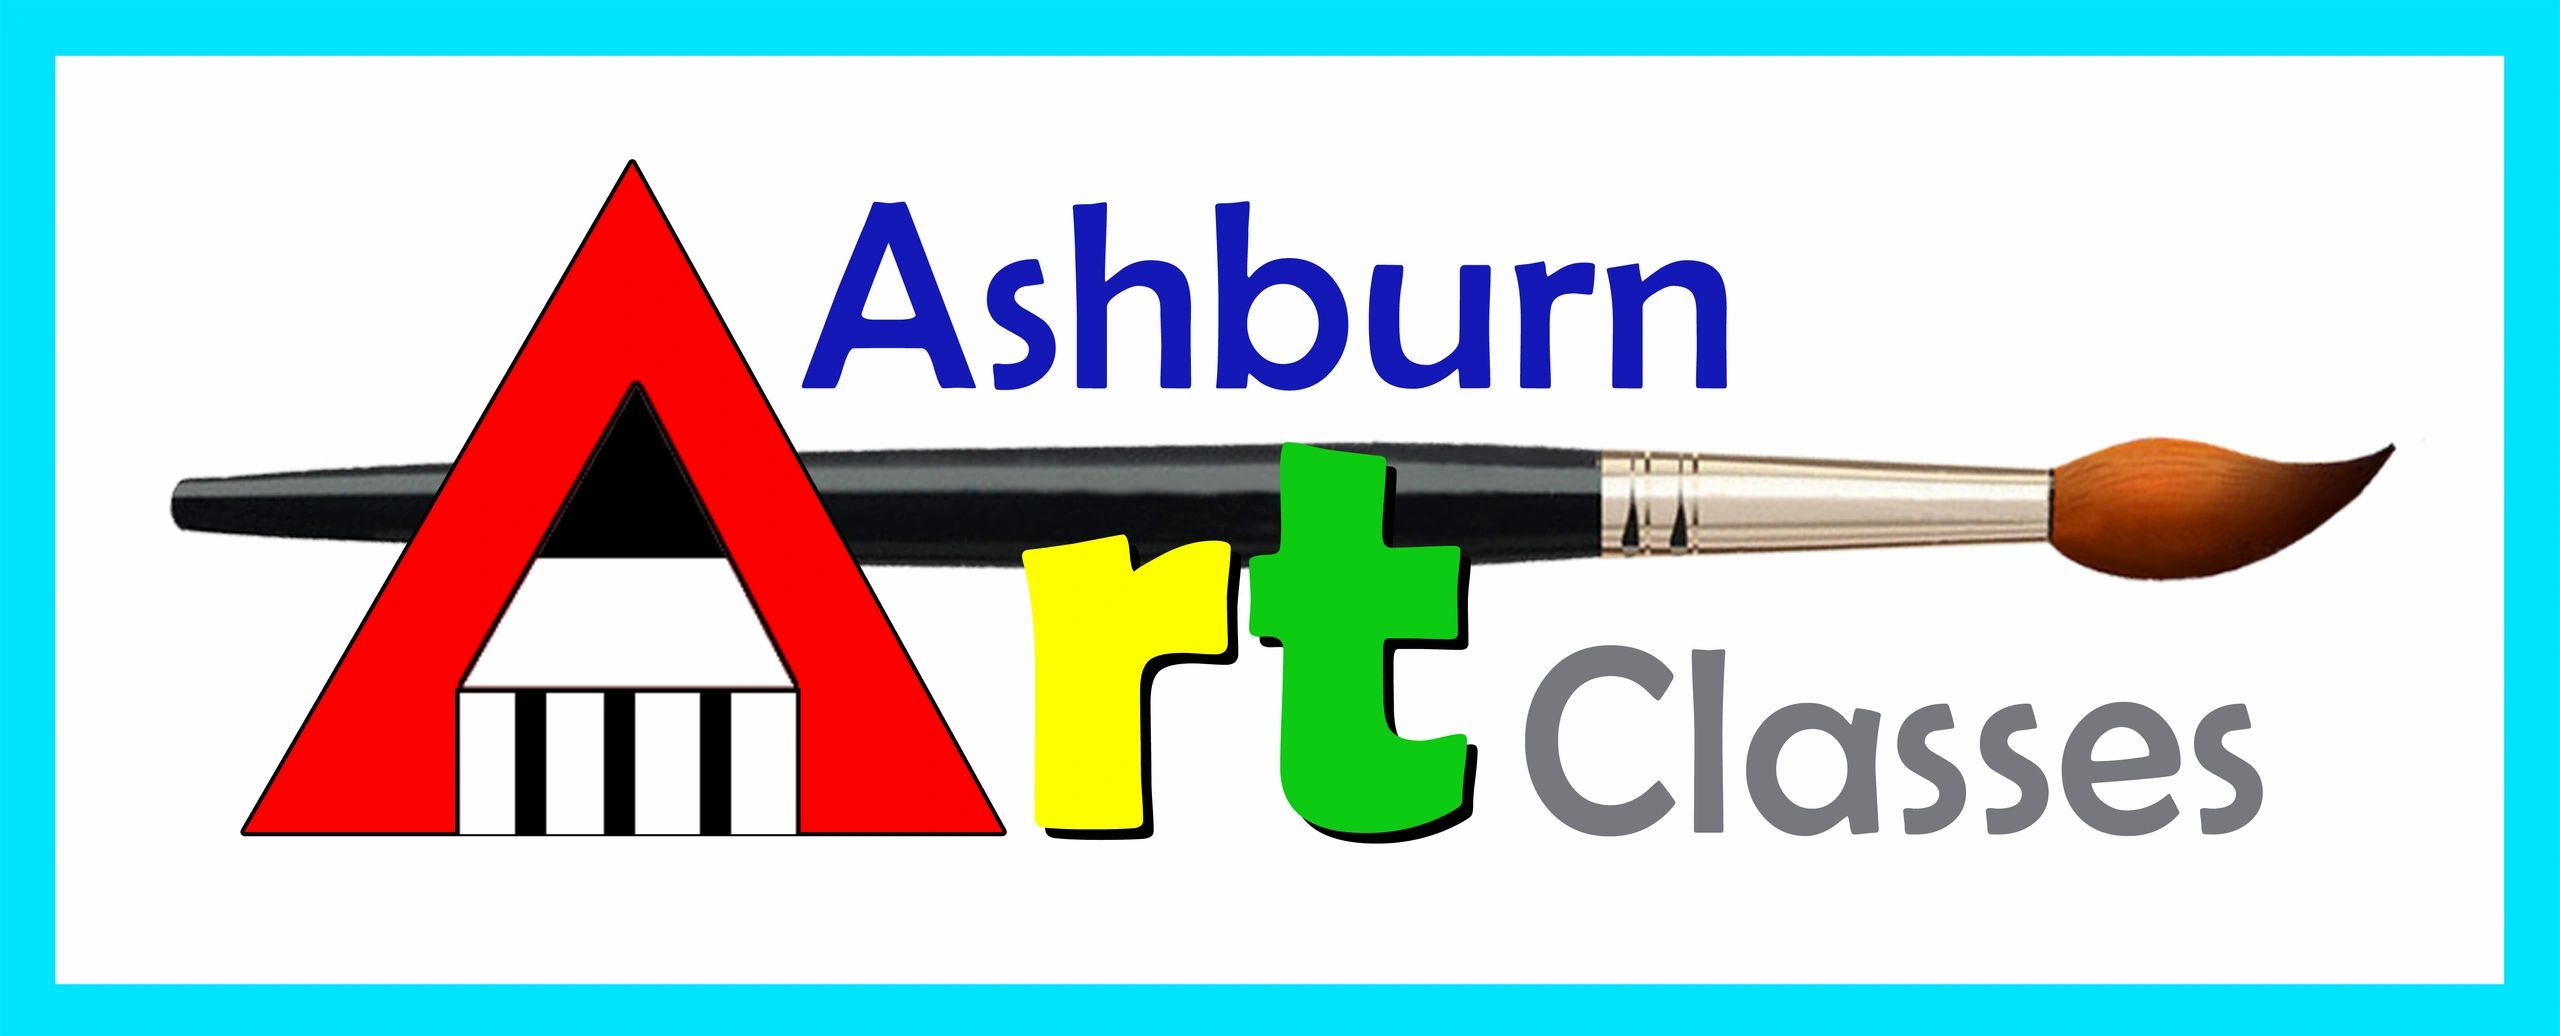 New art studio for kids coming to Ashburn - The Burn